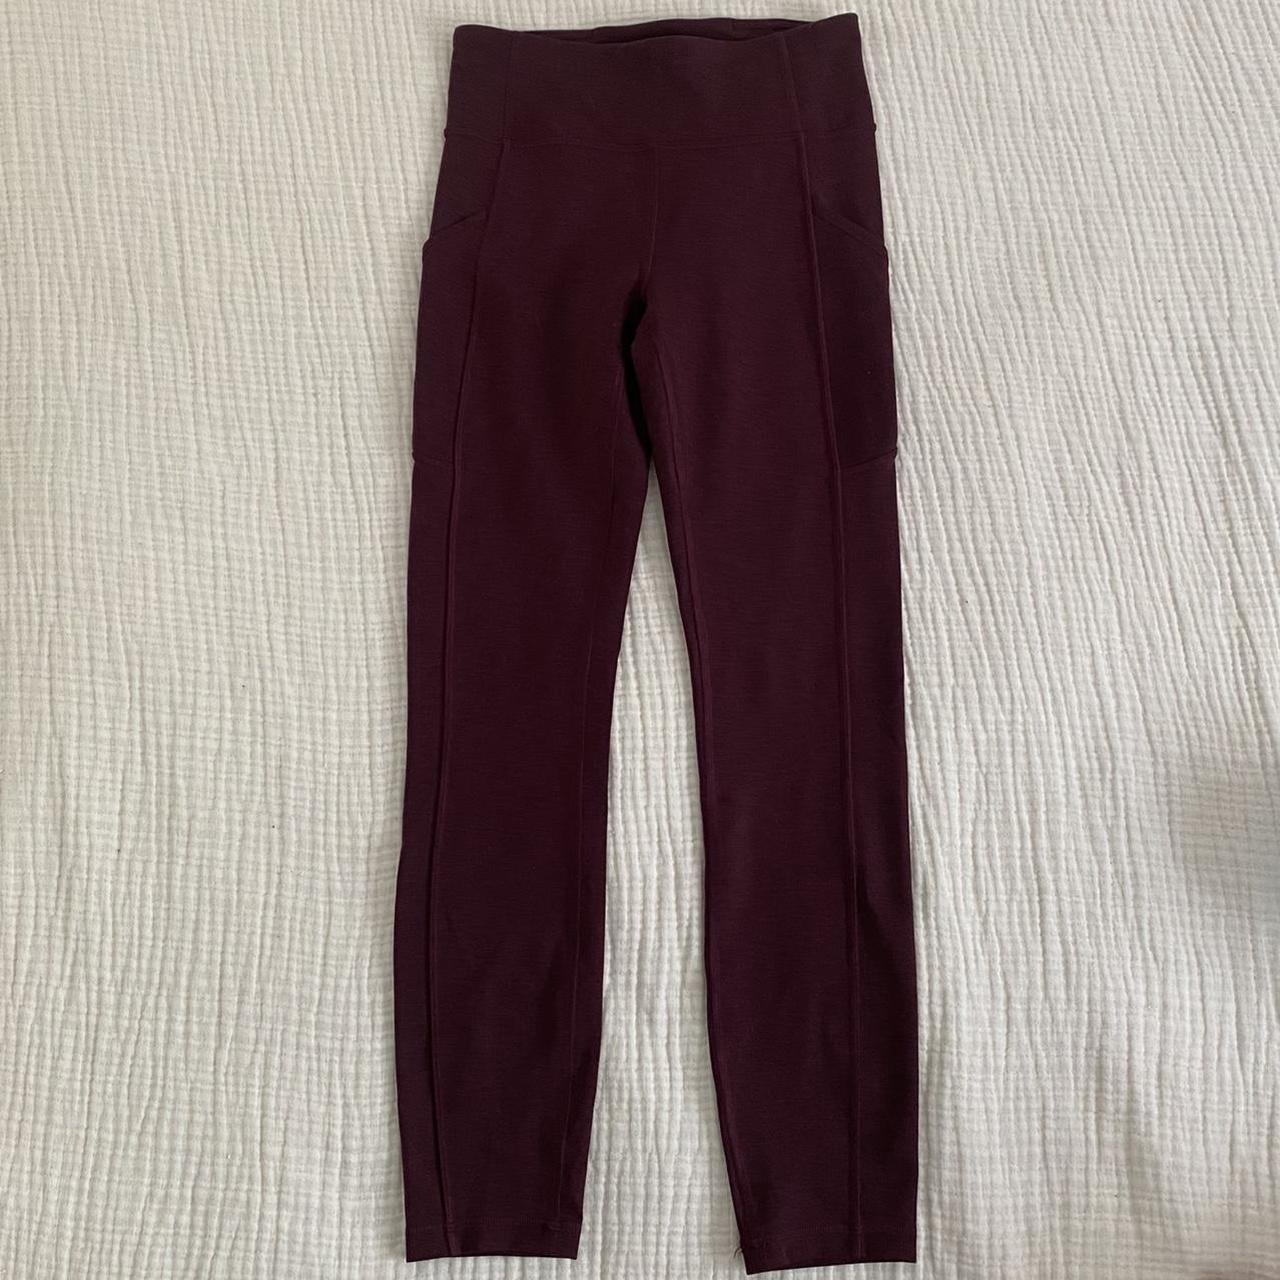 Red/burgundy lululemon leggings with pockets in - Depop